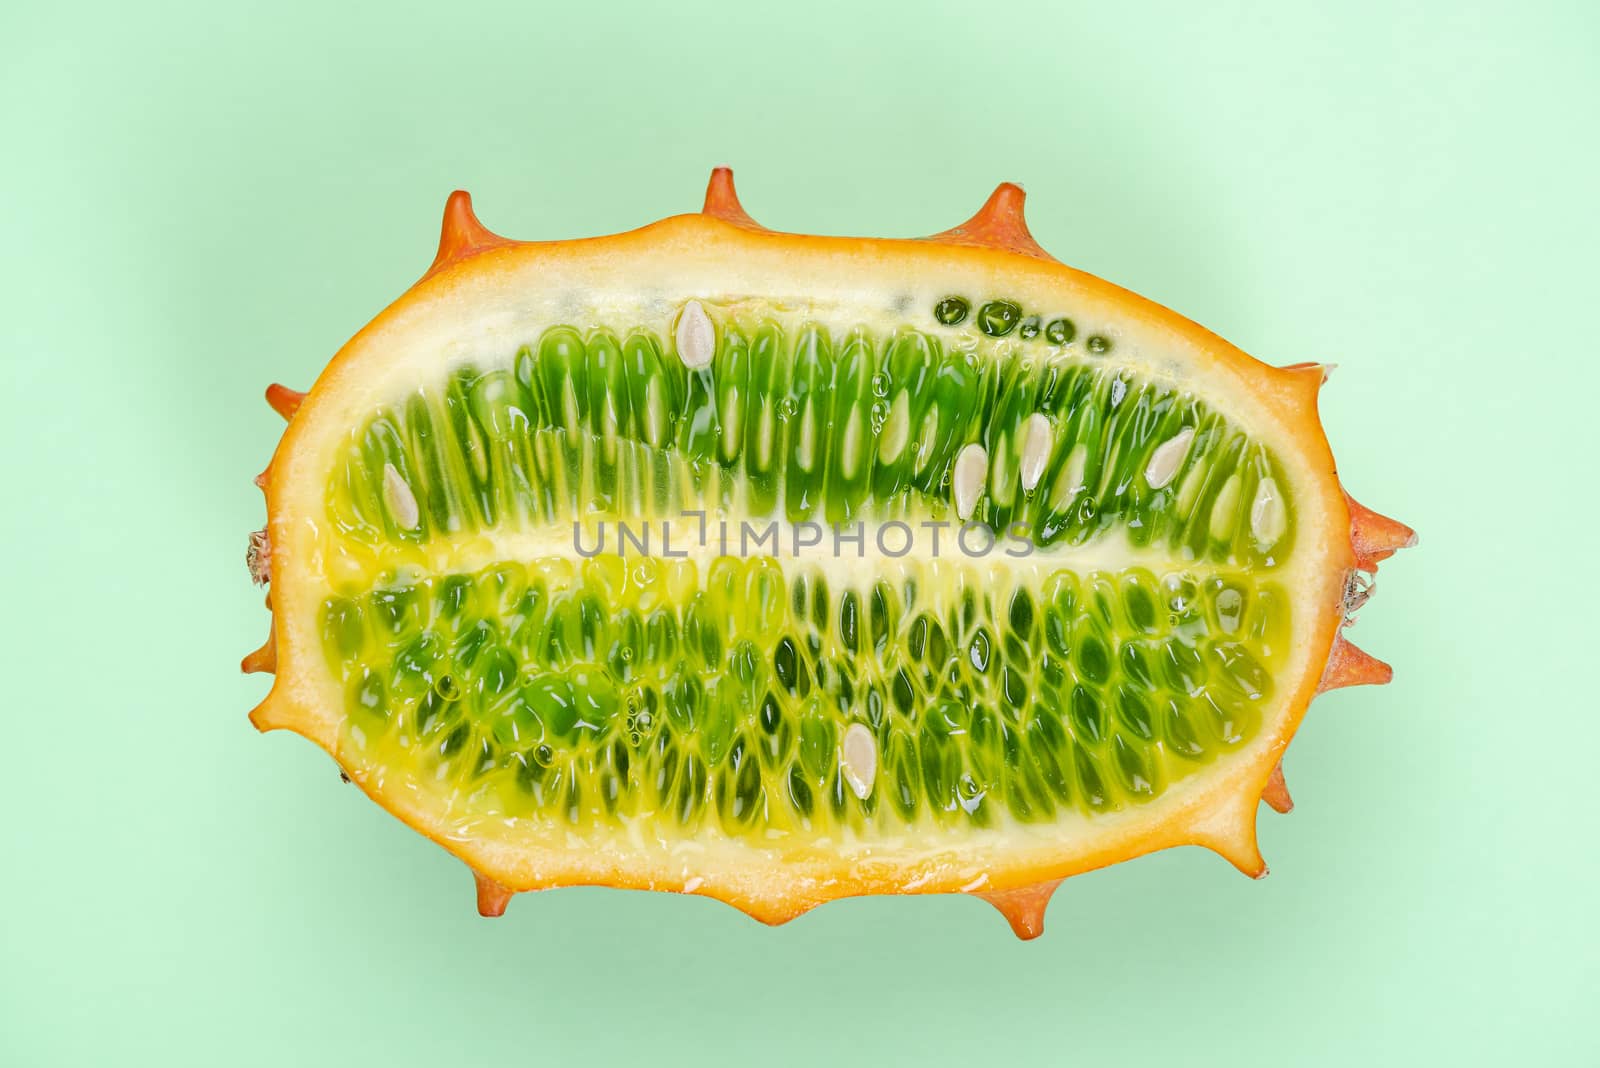 Kiwano or Horned Melon Fruit Cut in Half. Exotic Fruit. Detail C by merc67